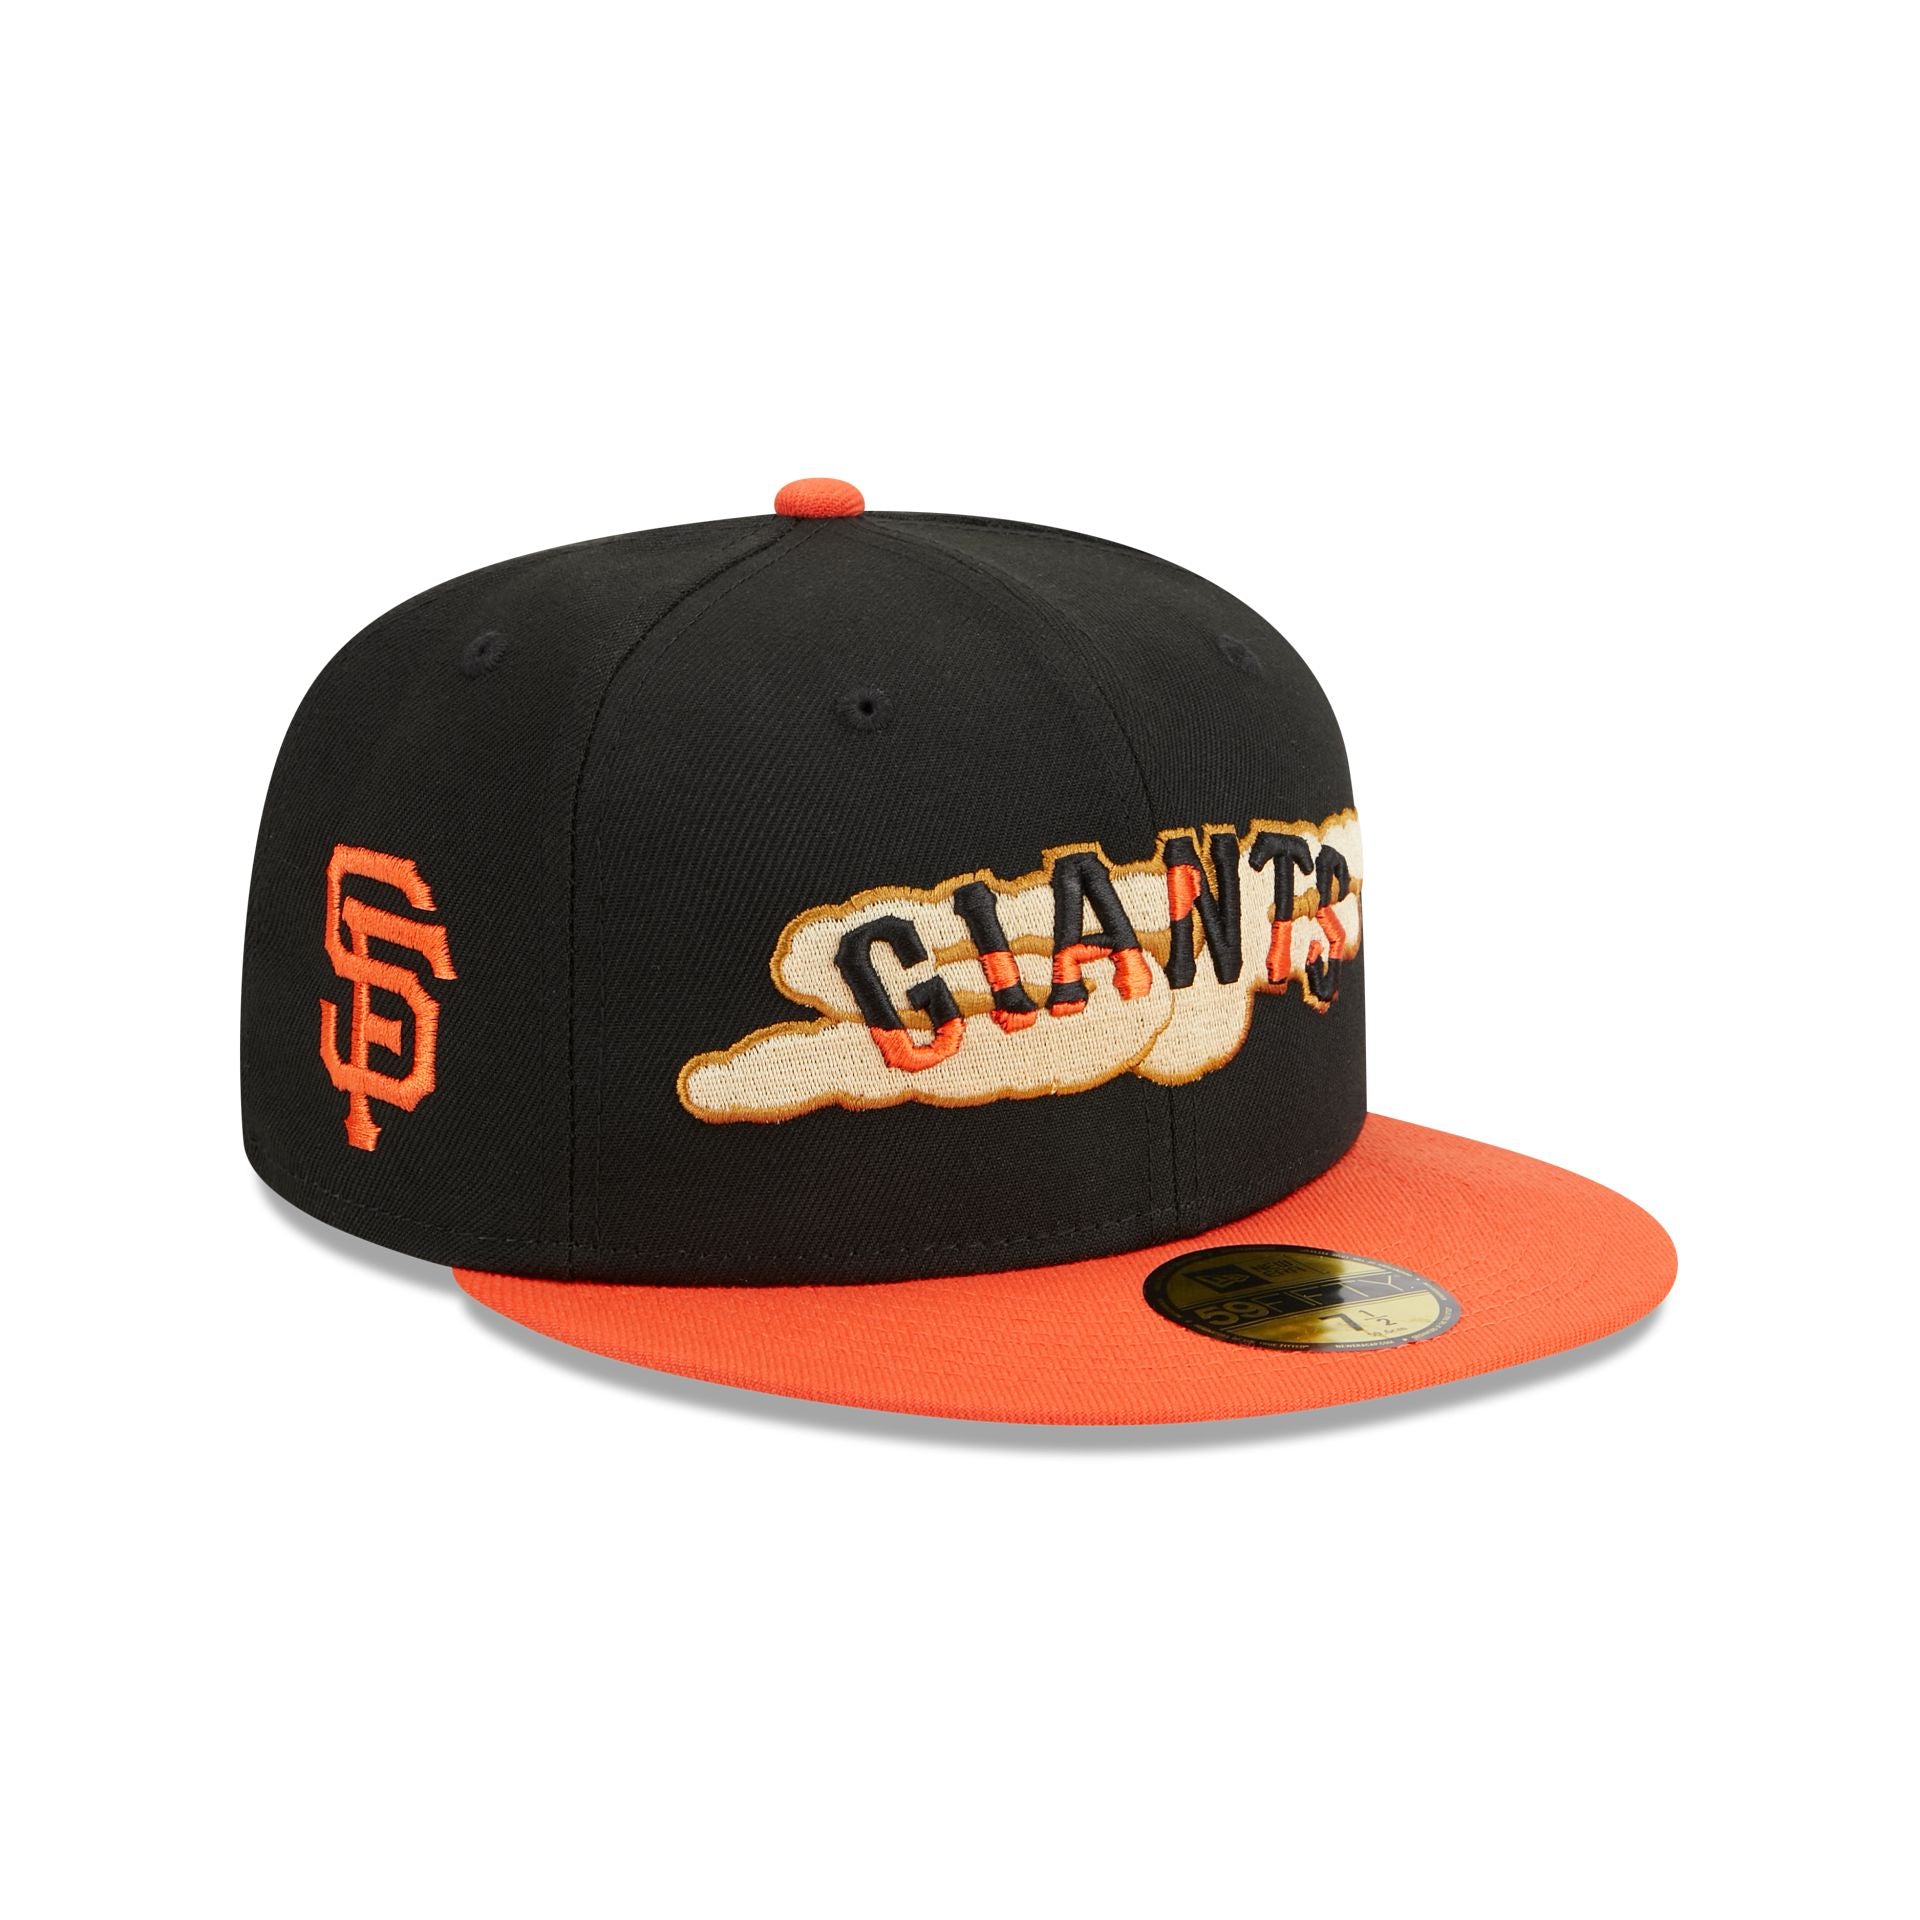 San Francisco Giants New Era 59FIFTY Fitted Hat - Orange/Black